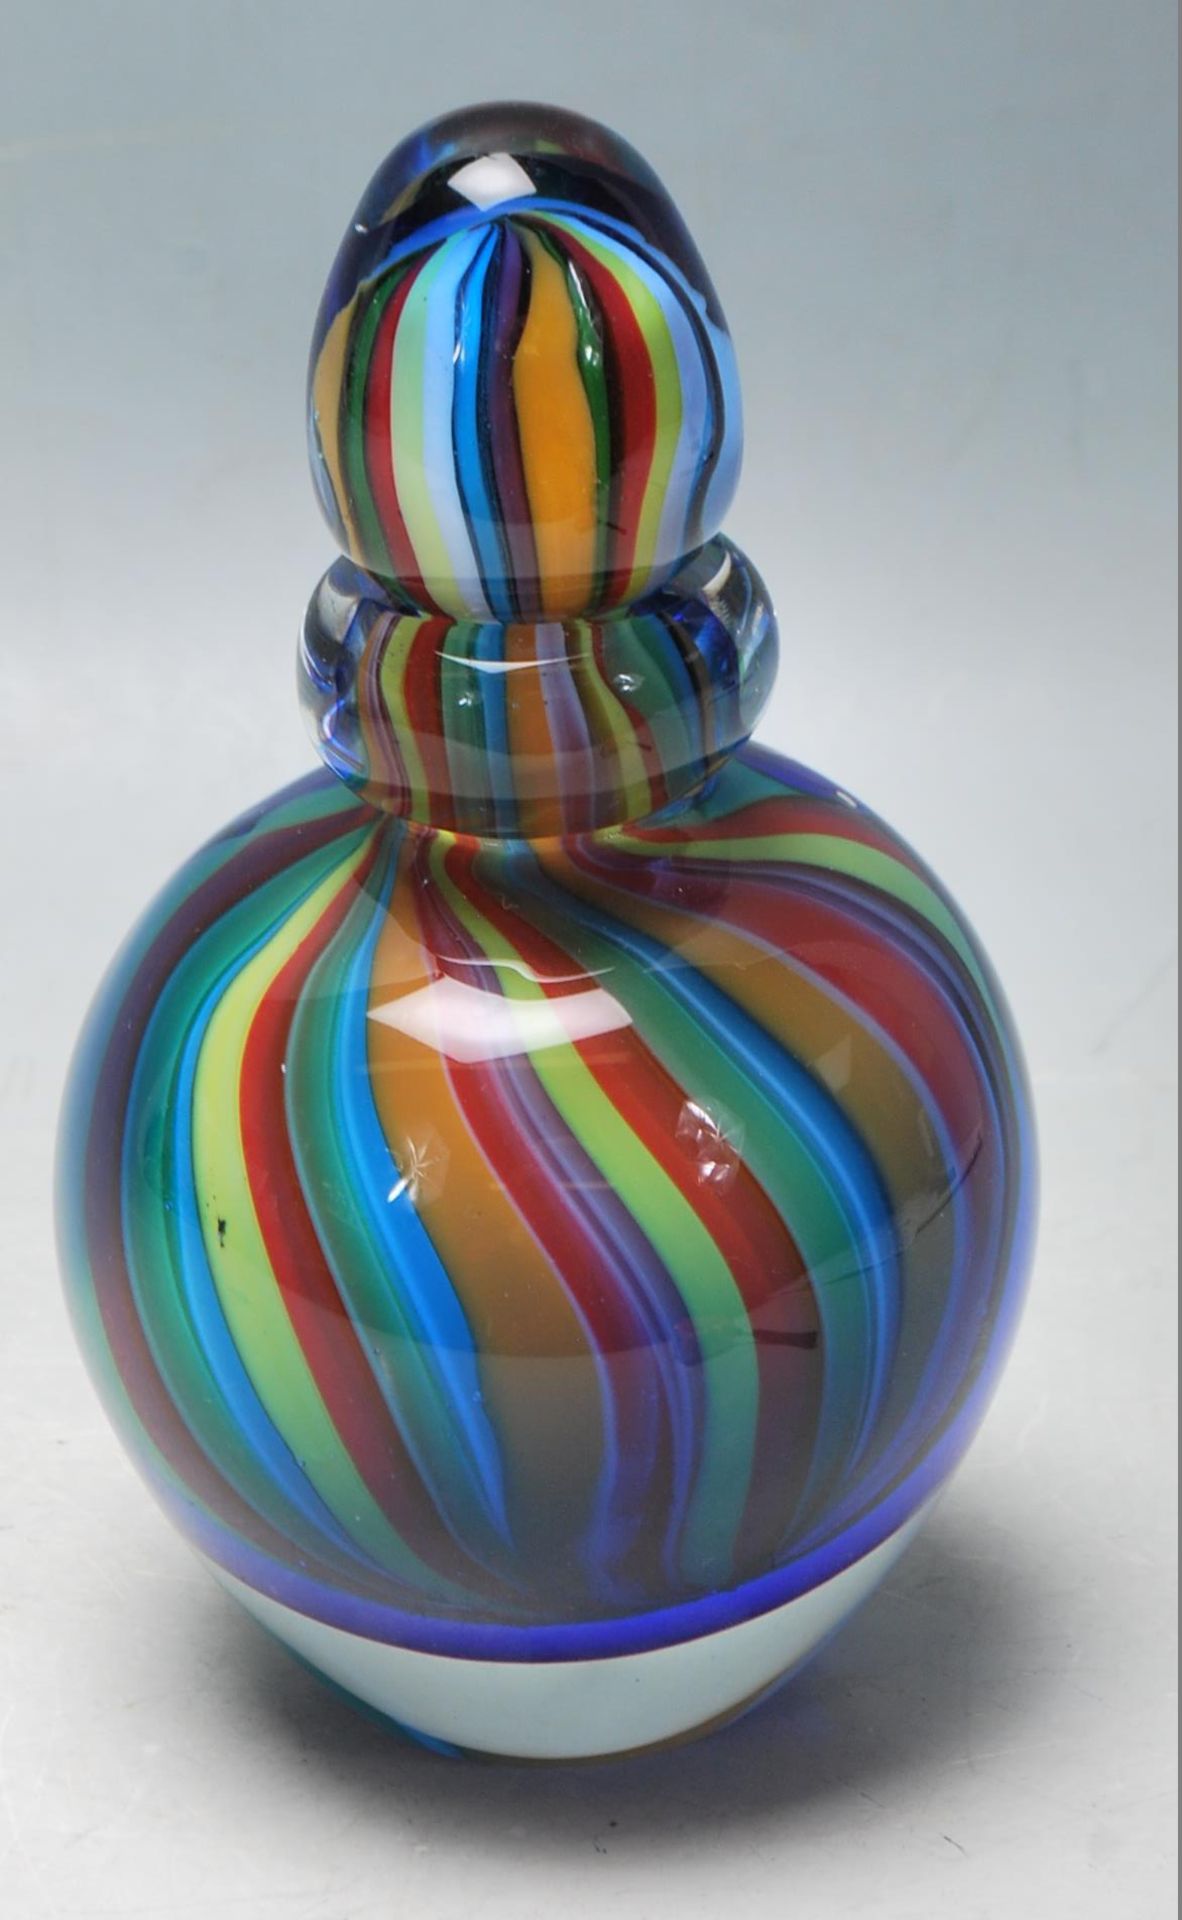 MURANO STUDIO ART GLASS PERFUME BOTTLE WITH MULTICOLOURED TWISTED DESIGN DECORATION - Image 3 of 5